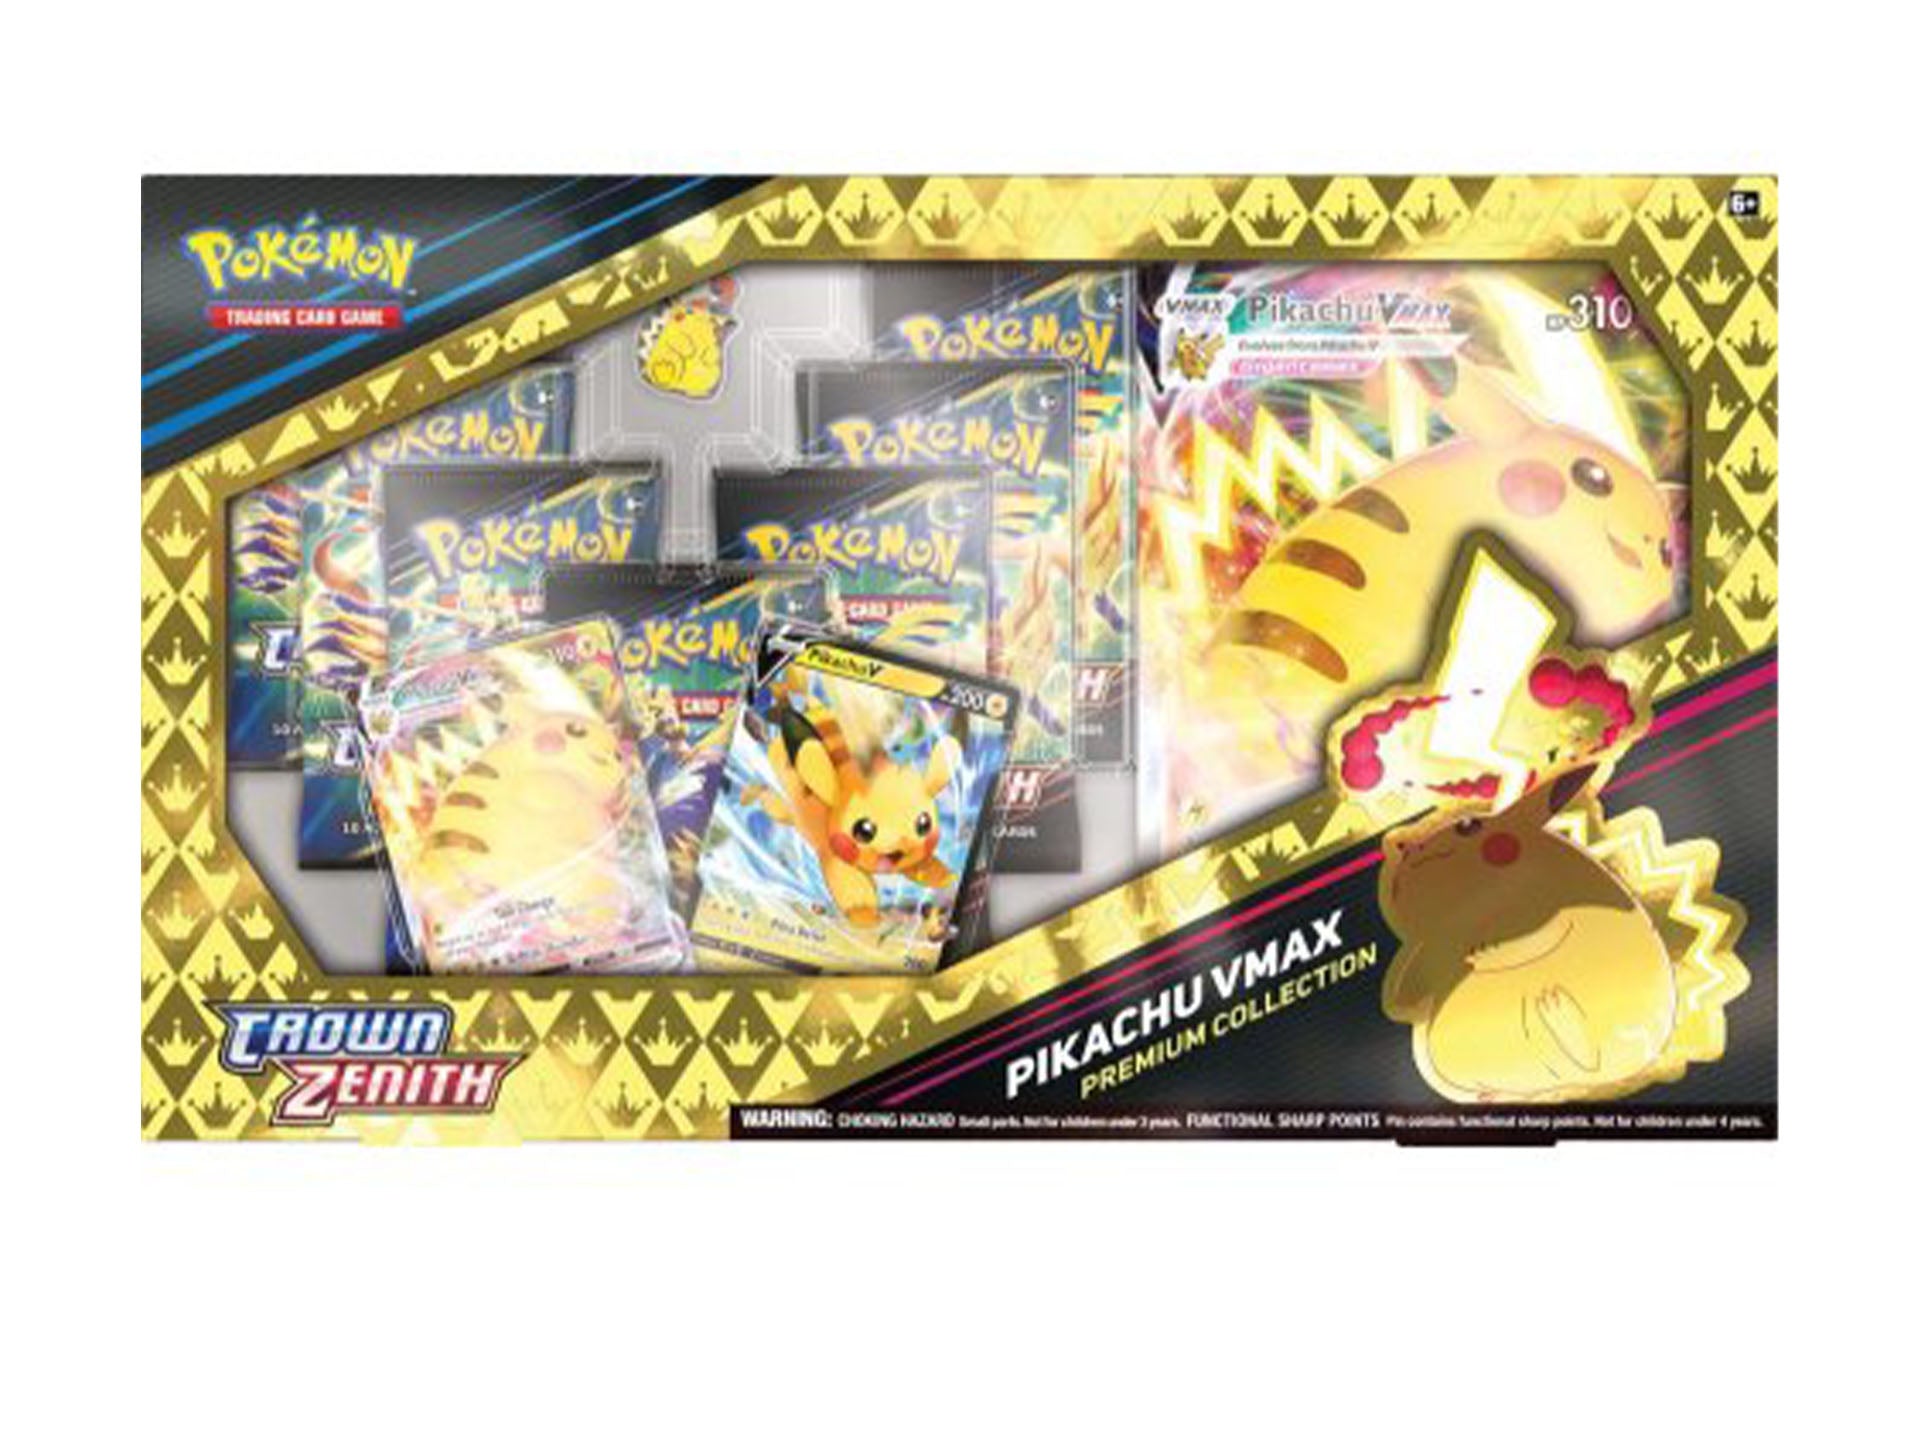 Pokémon Pikachu Vmax Premium Collection